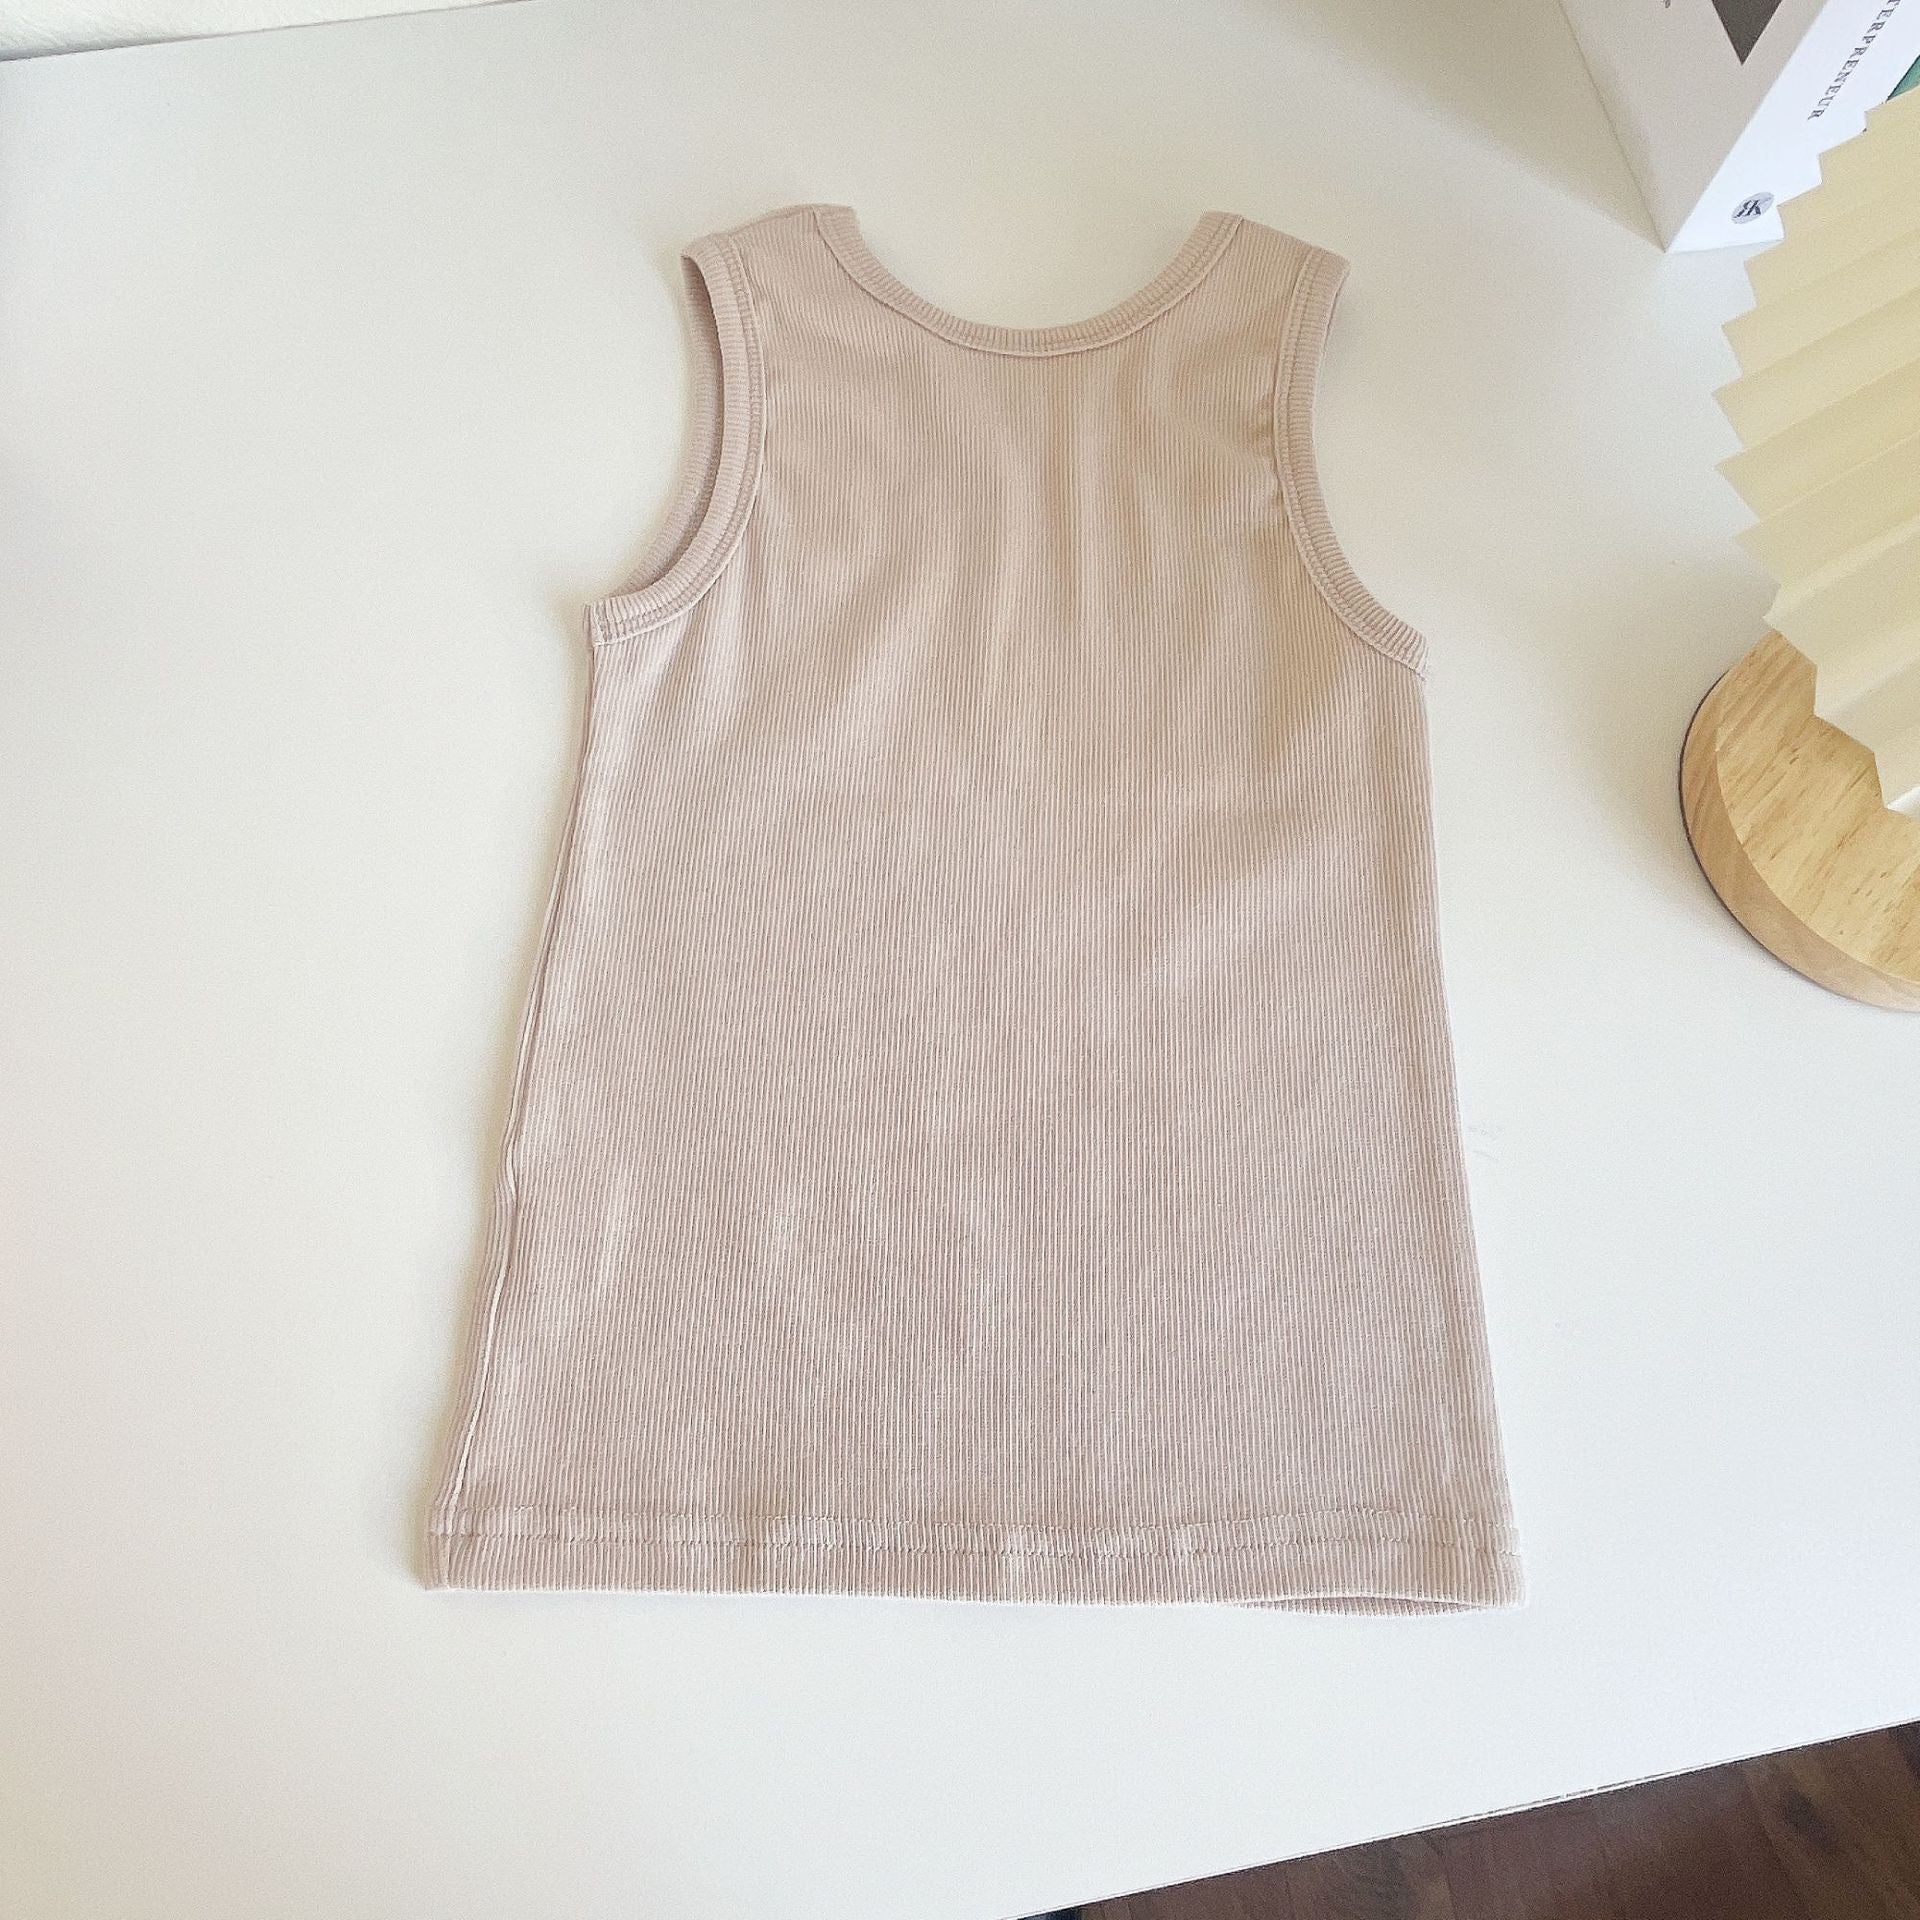 [363667] - Baju Setelan Kaos Kutung Overall Chino Fashion Import Anak Perempuan - Motif Rear Pom